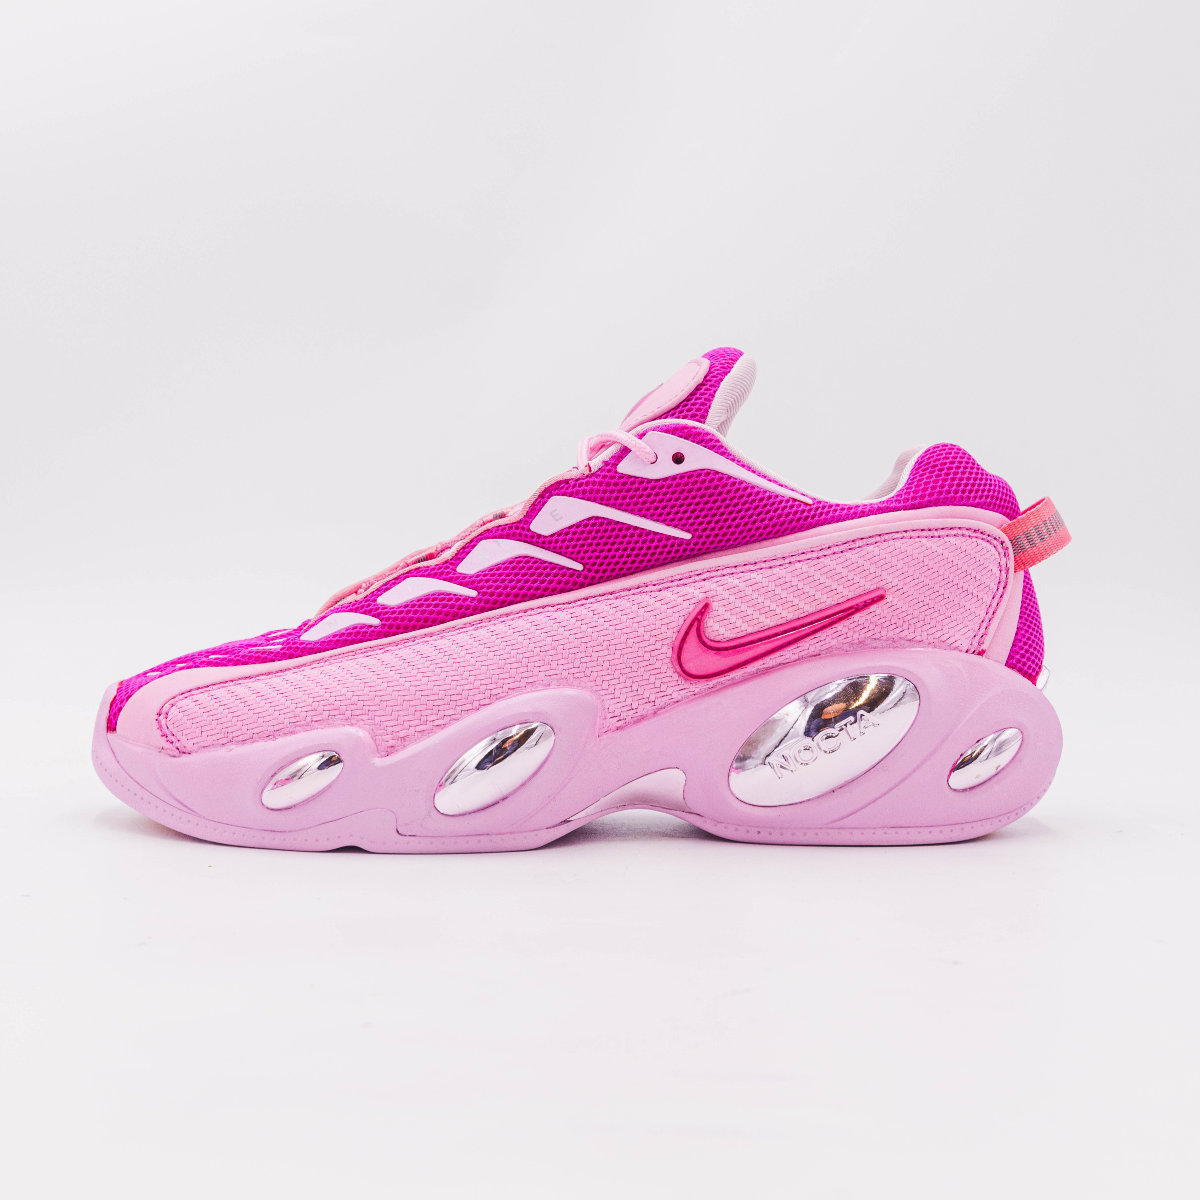 Drake Brings Out Custom Pink NOCTA Nike Glides for LA Tour Stop